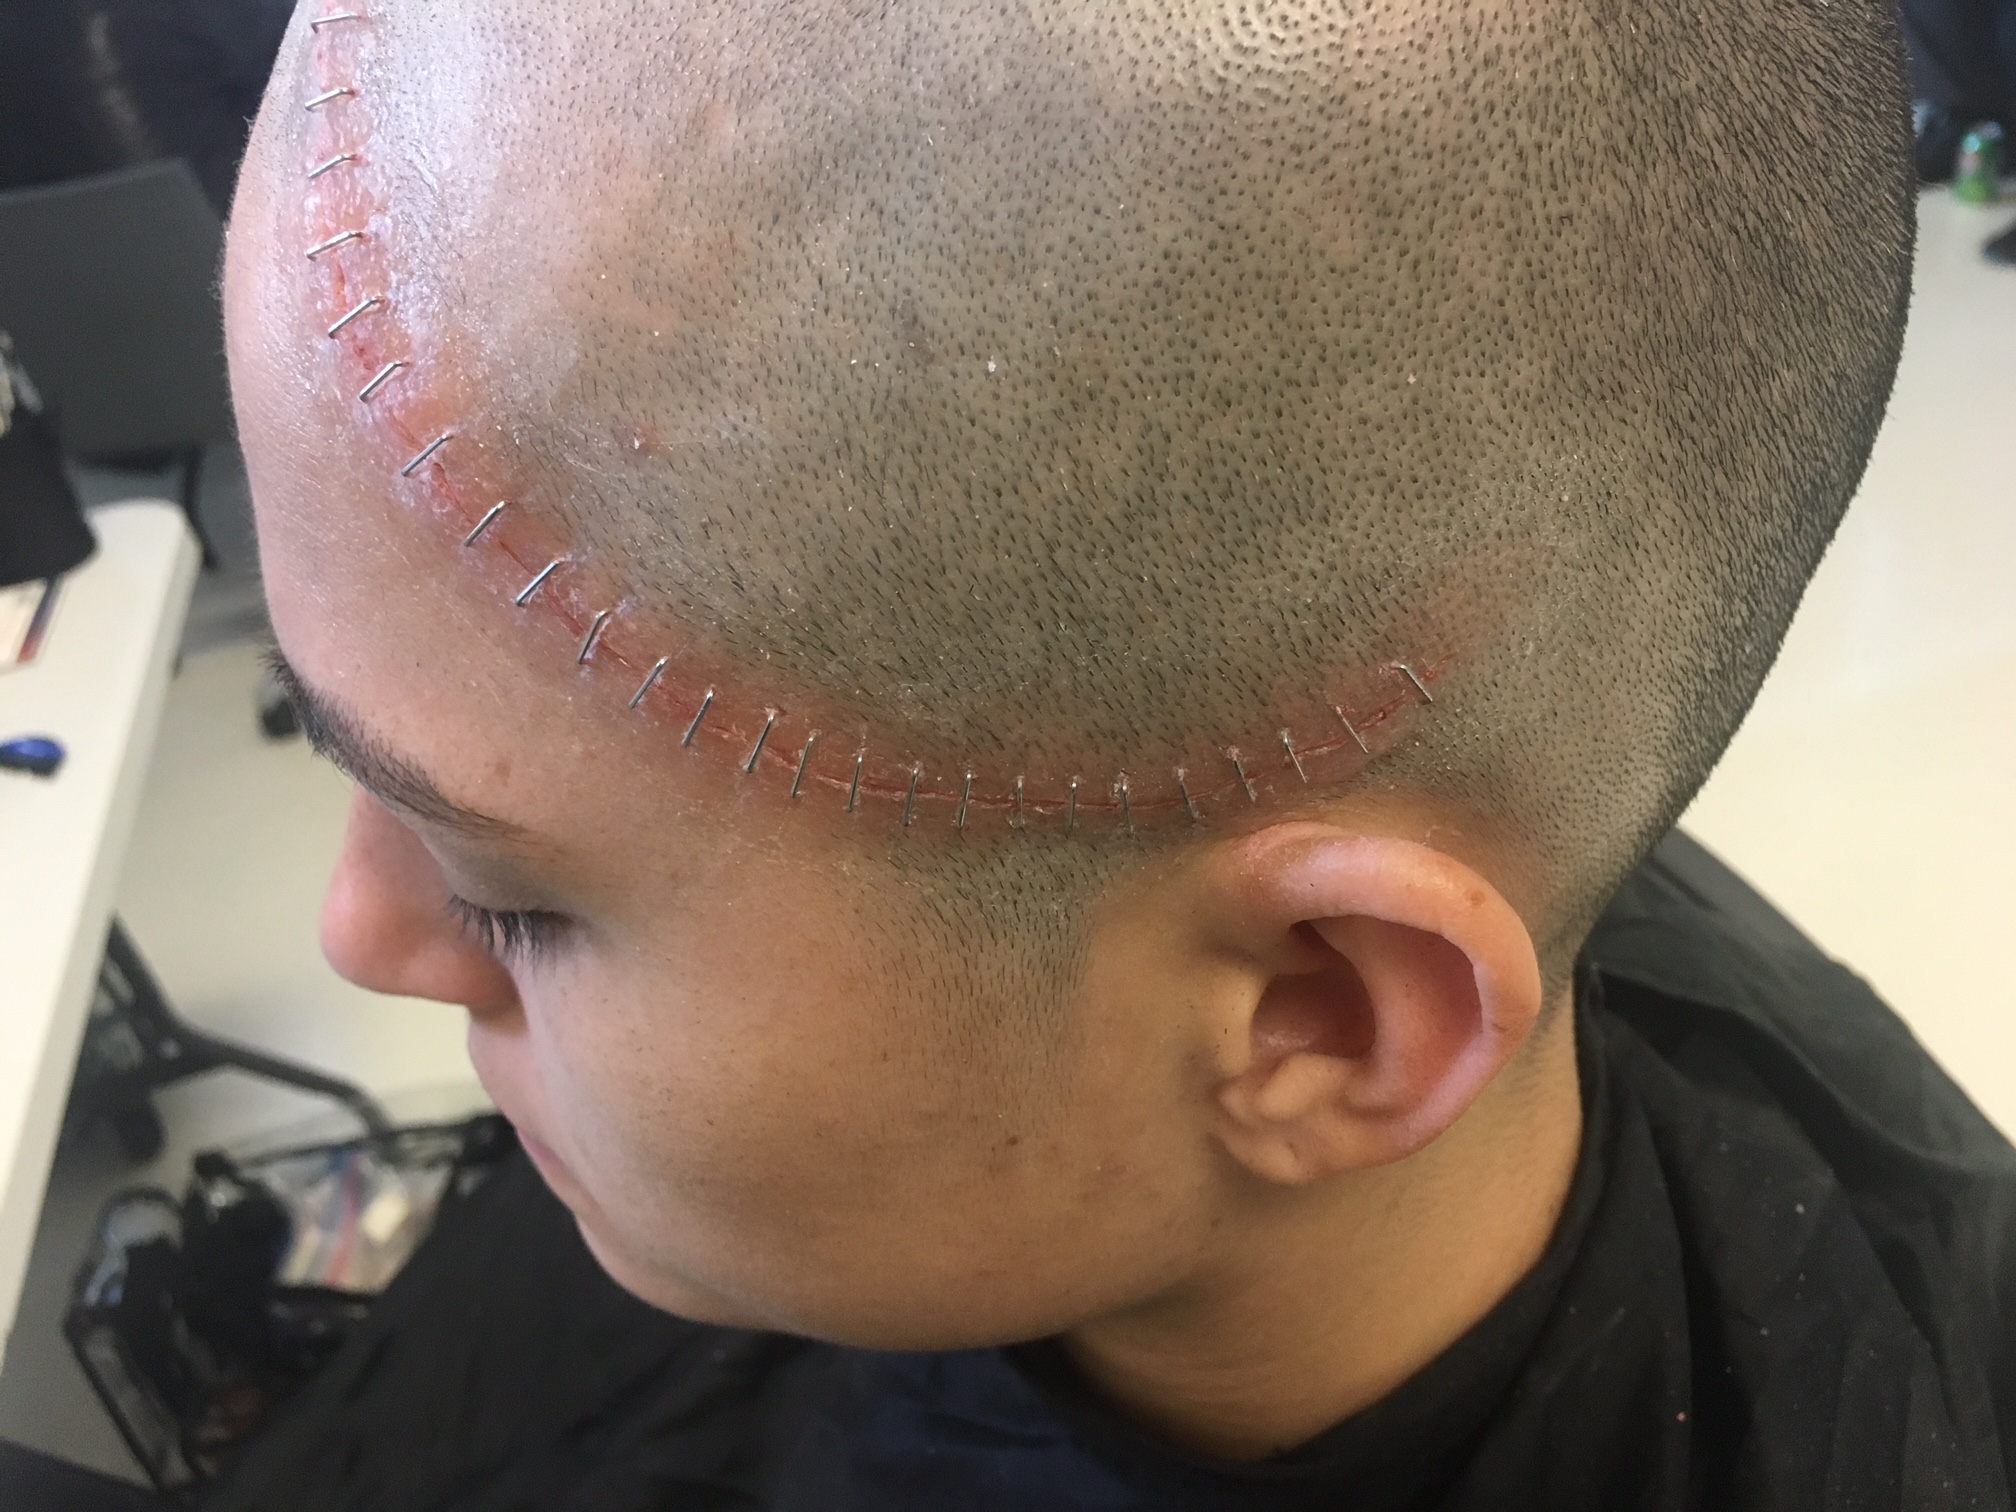 Unpainted 'brain surgery scar'